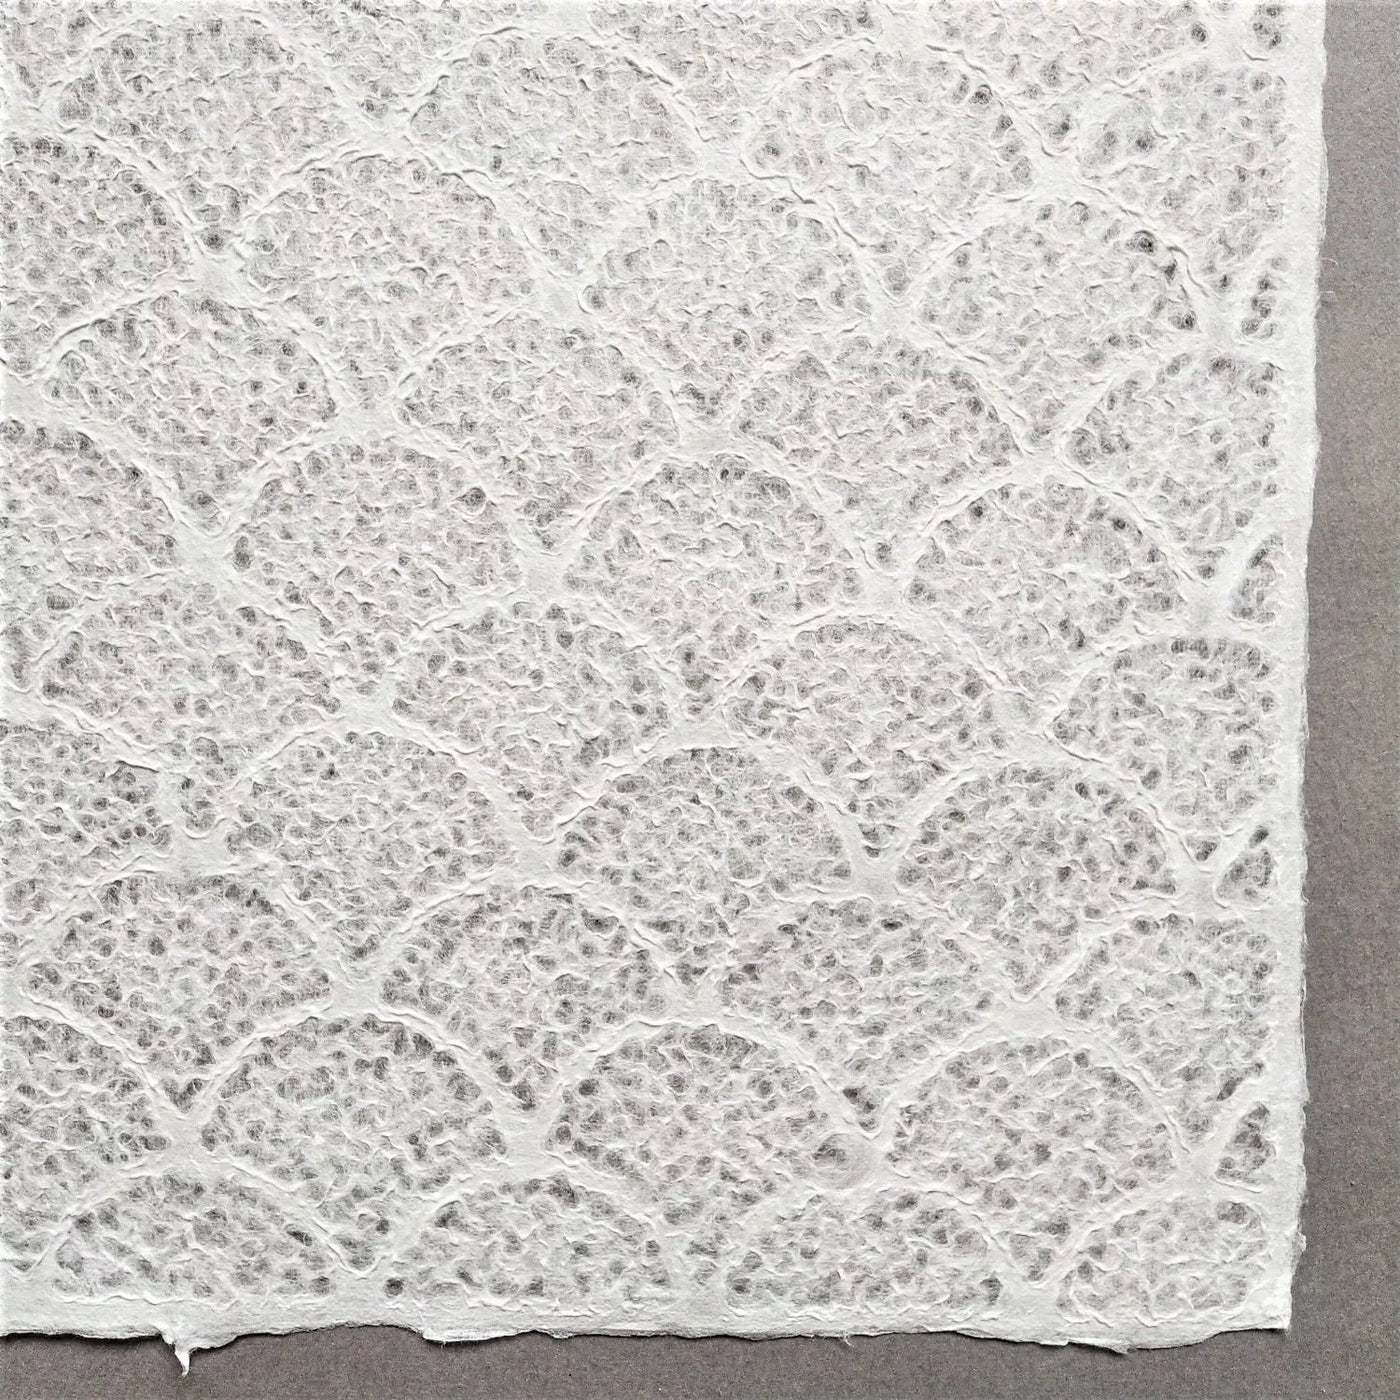 Handmade Lace Kozo Paper (Wave)